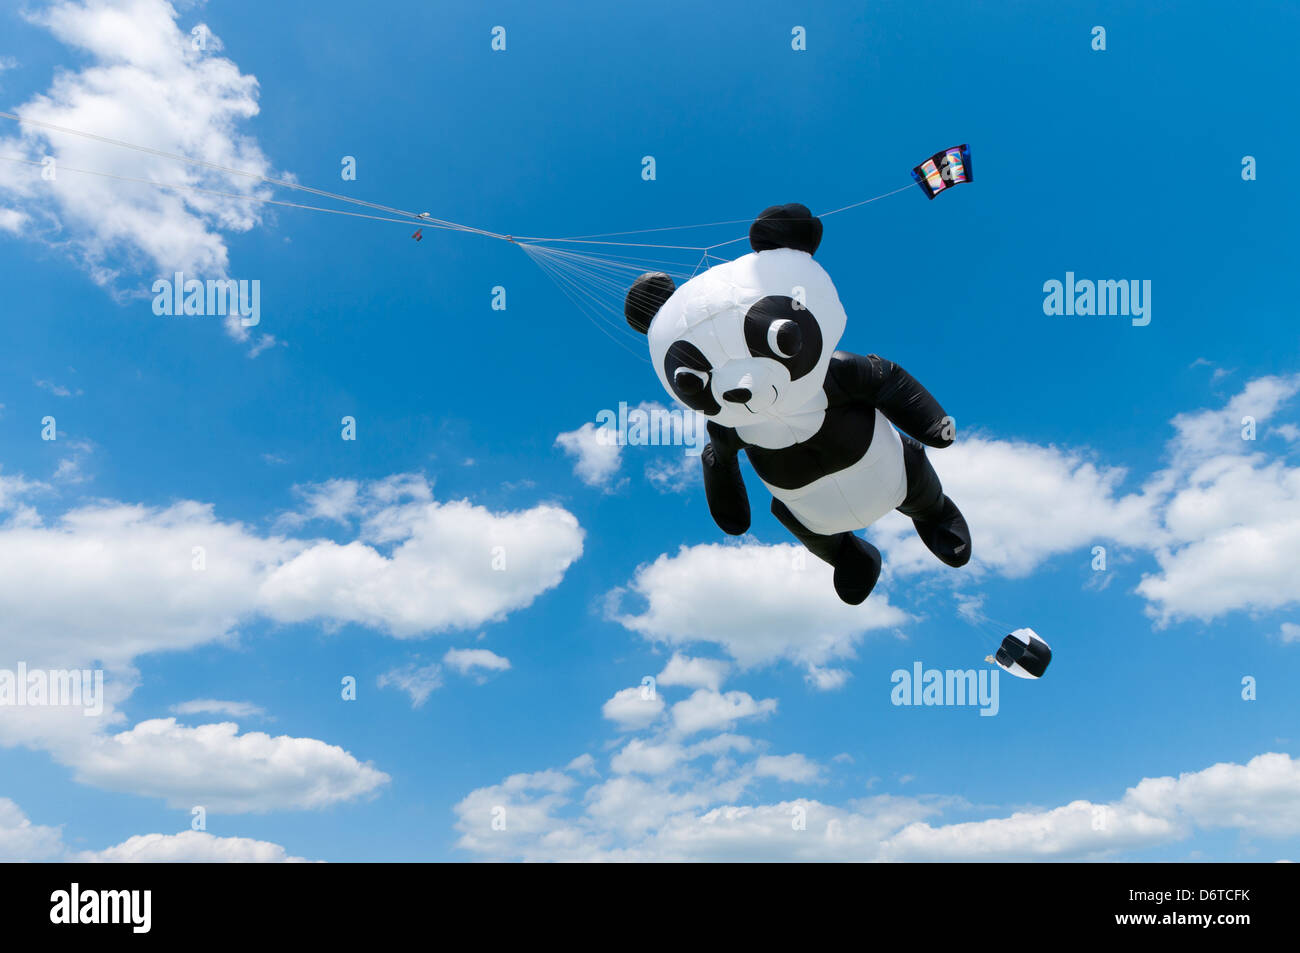 Giant Panda kite Stockfoto